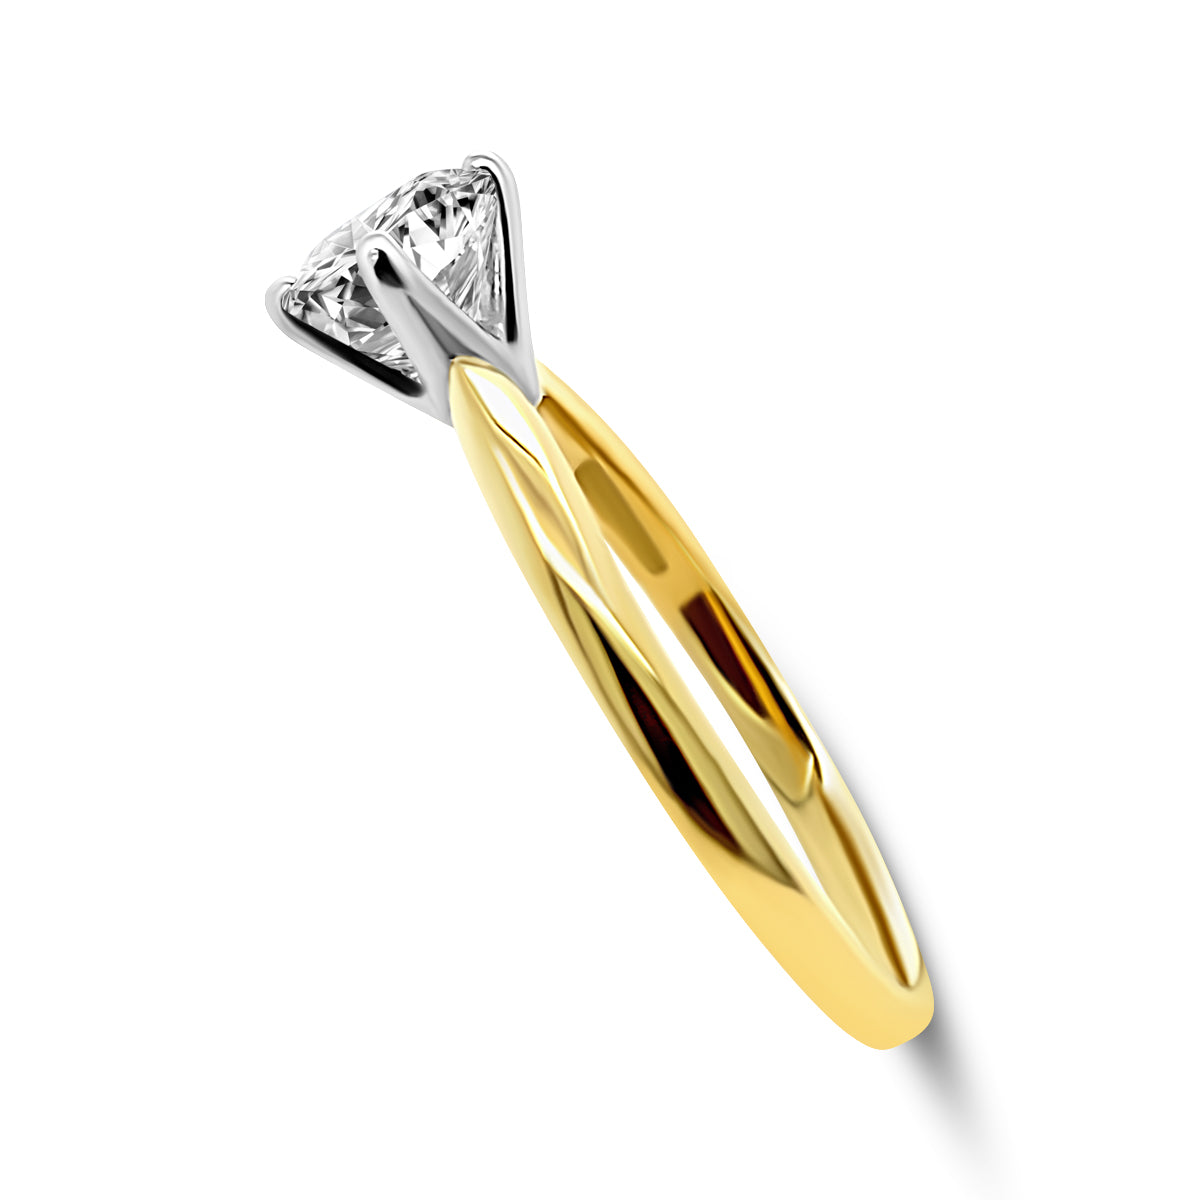 18K Yellow Gold Diamond Engagement Ring